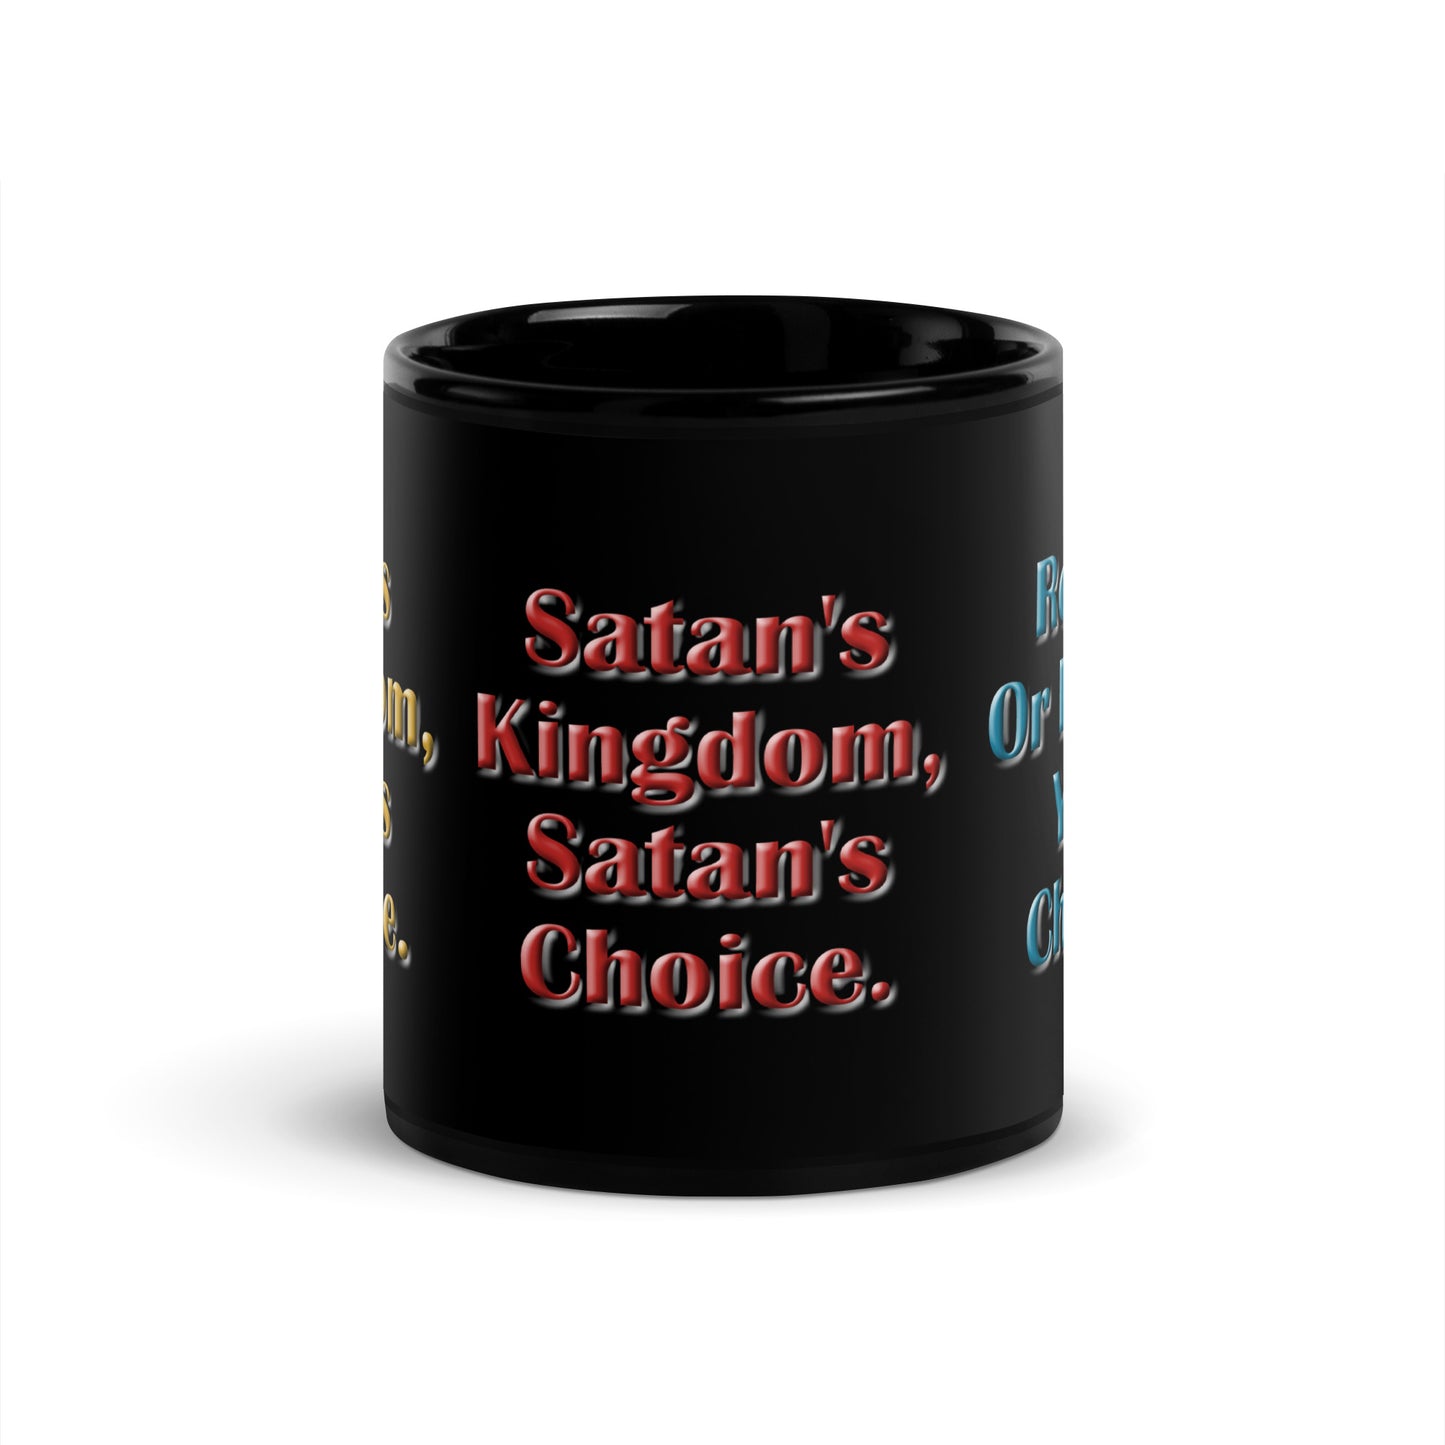 A012 Mug - Black Glossy Ceramic Mug Featuring the Text “God’s Kingdom, God’s Choice – Satan’s Kingdom, Satan’s Choice – Repent or Perish, Your Choice.”